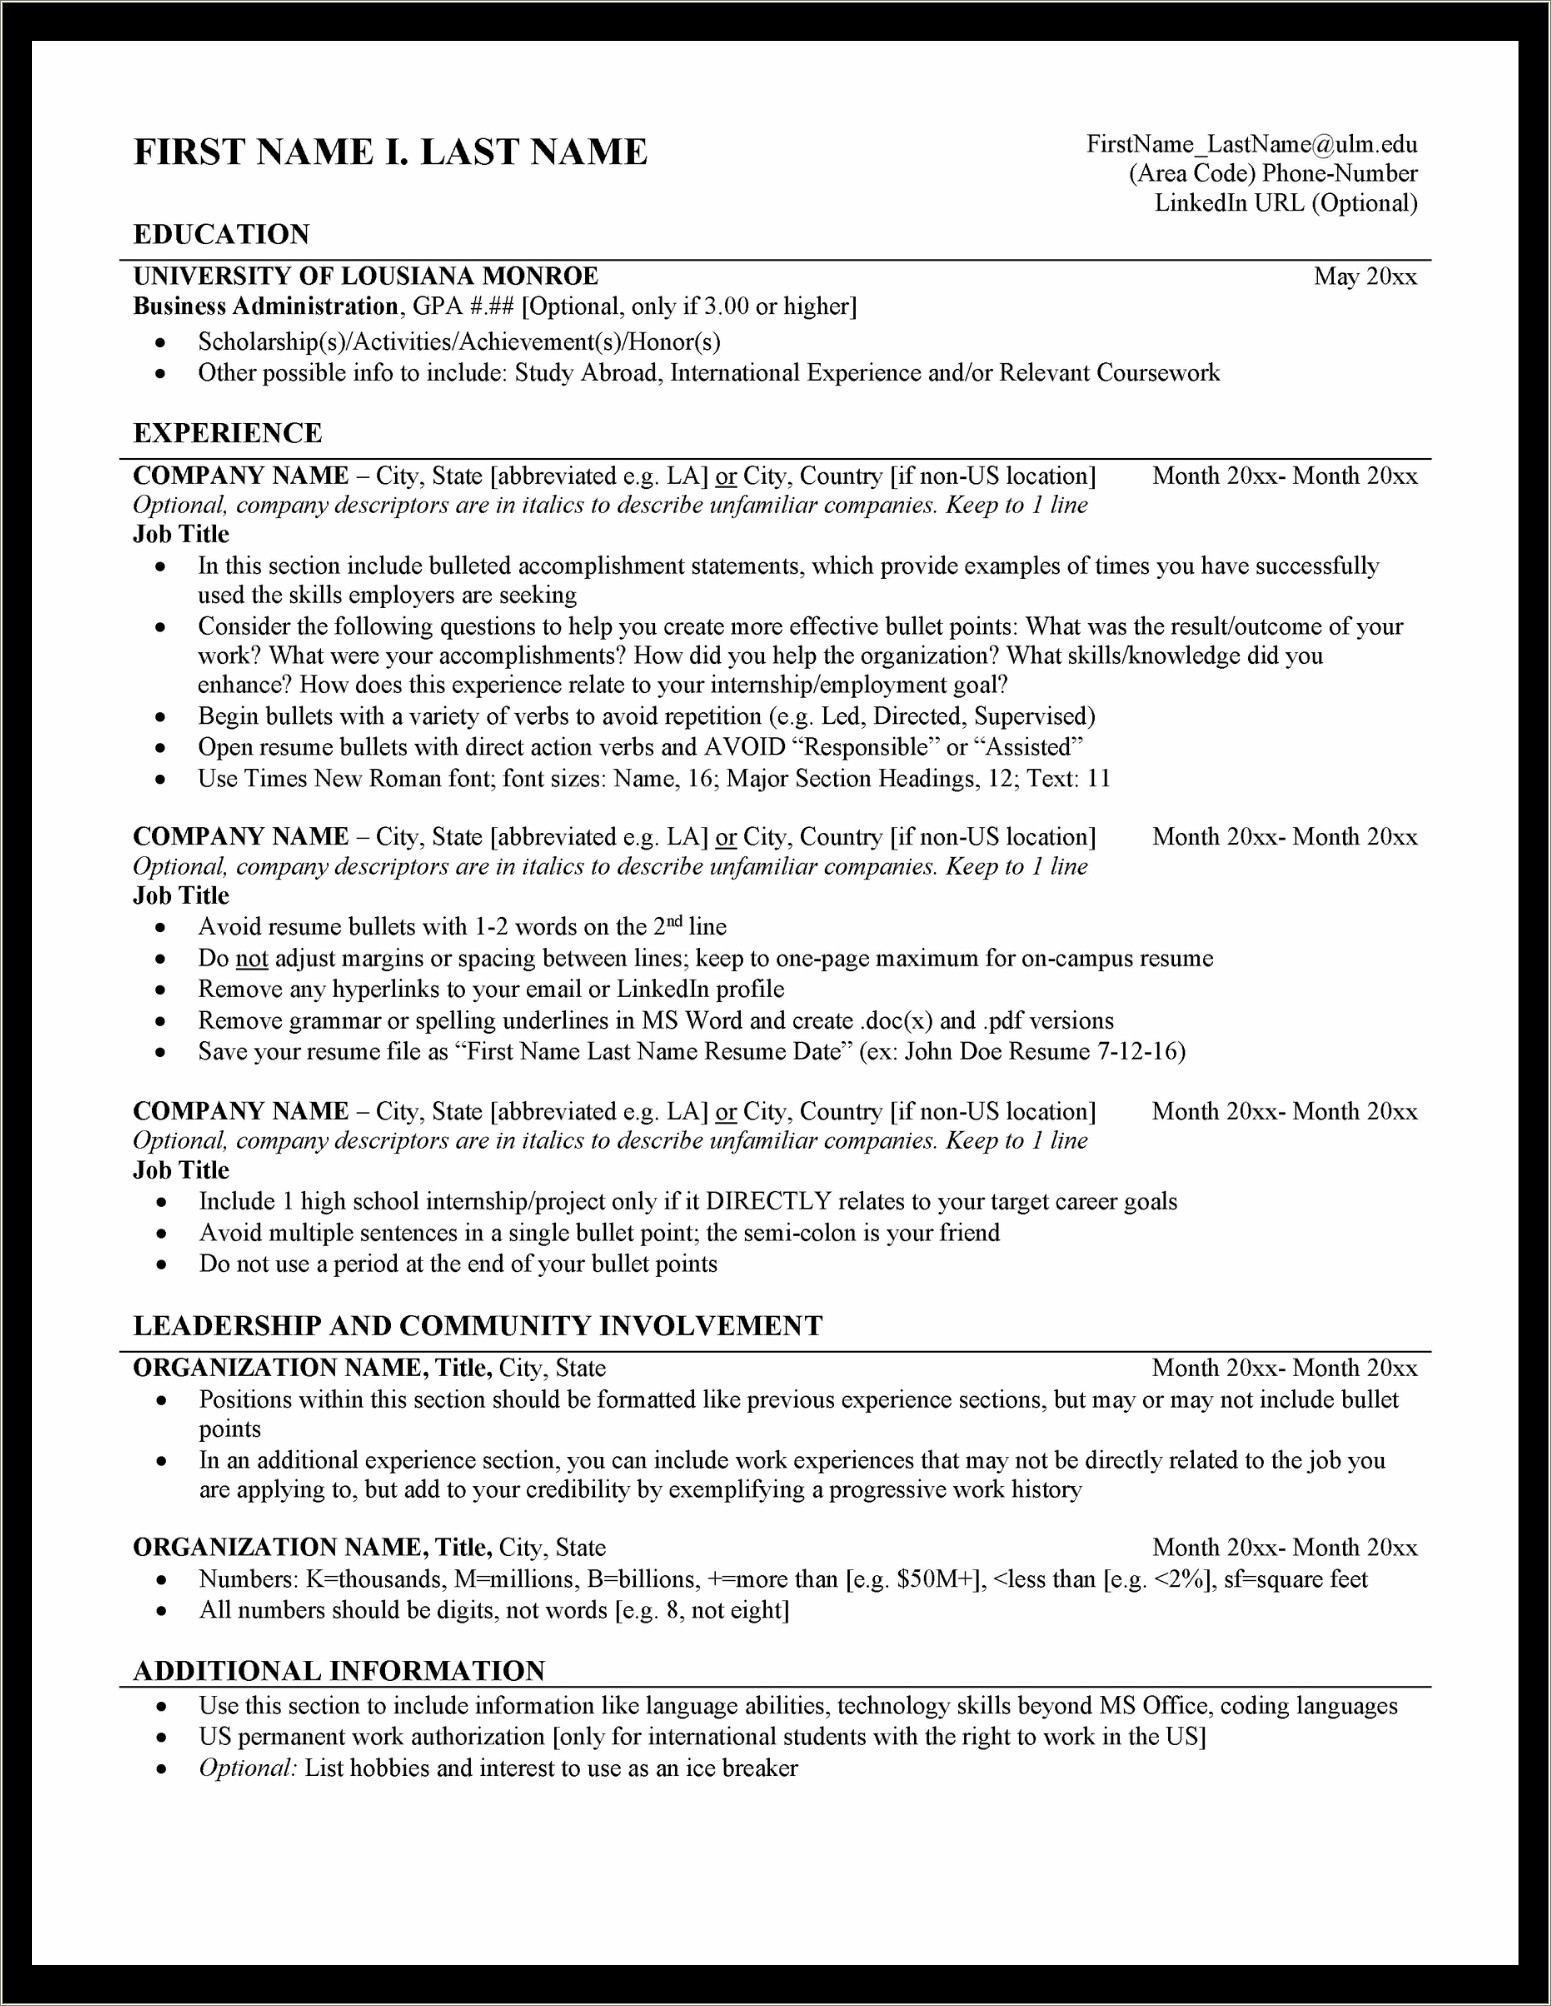 Resume Listing Multiple Summer Job Dates